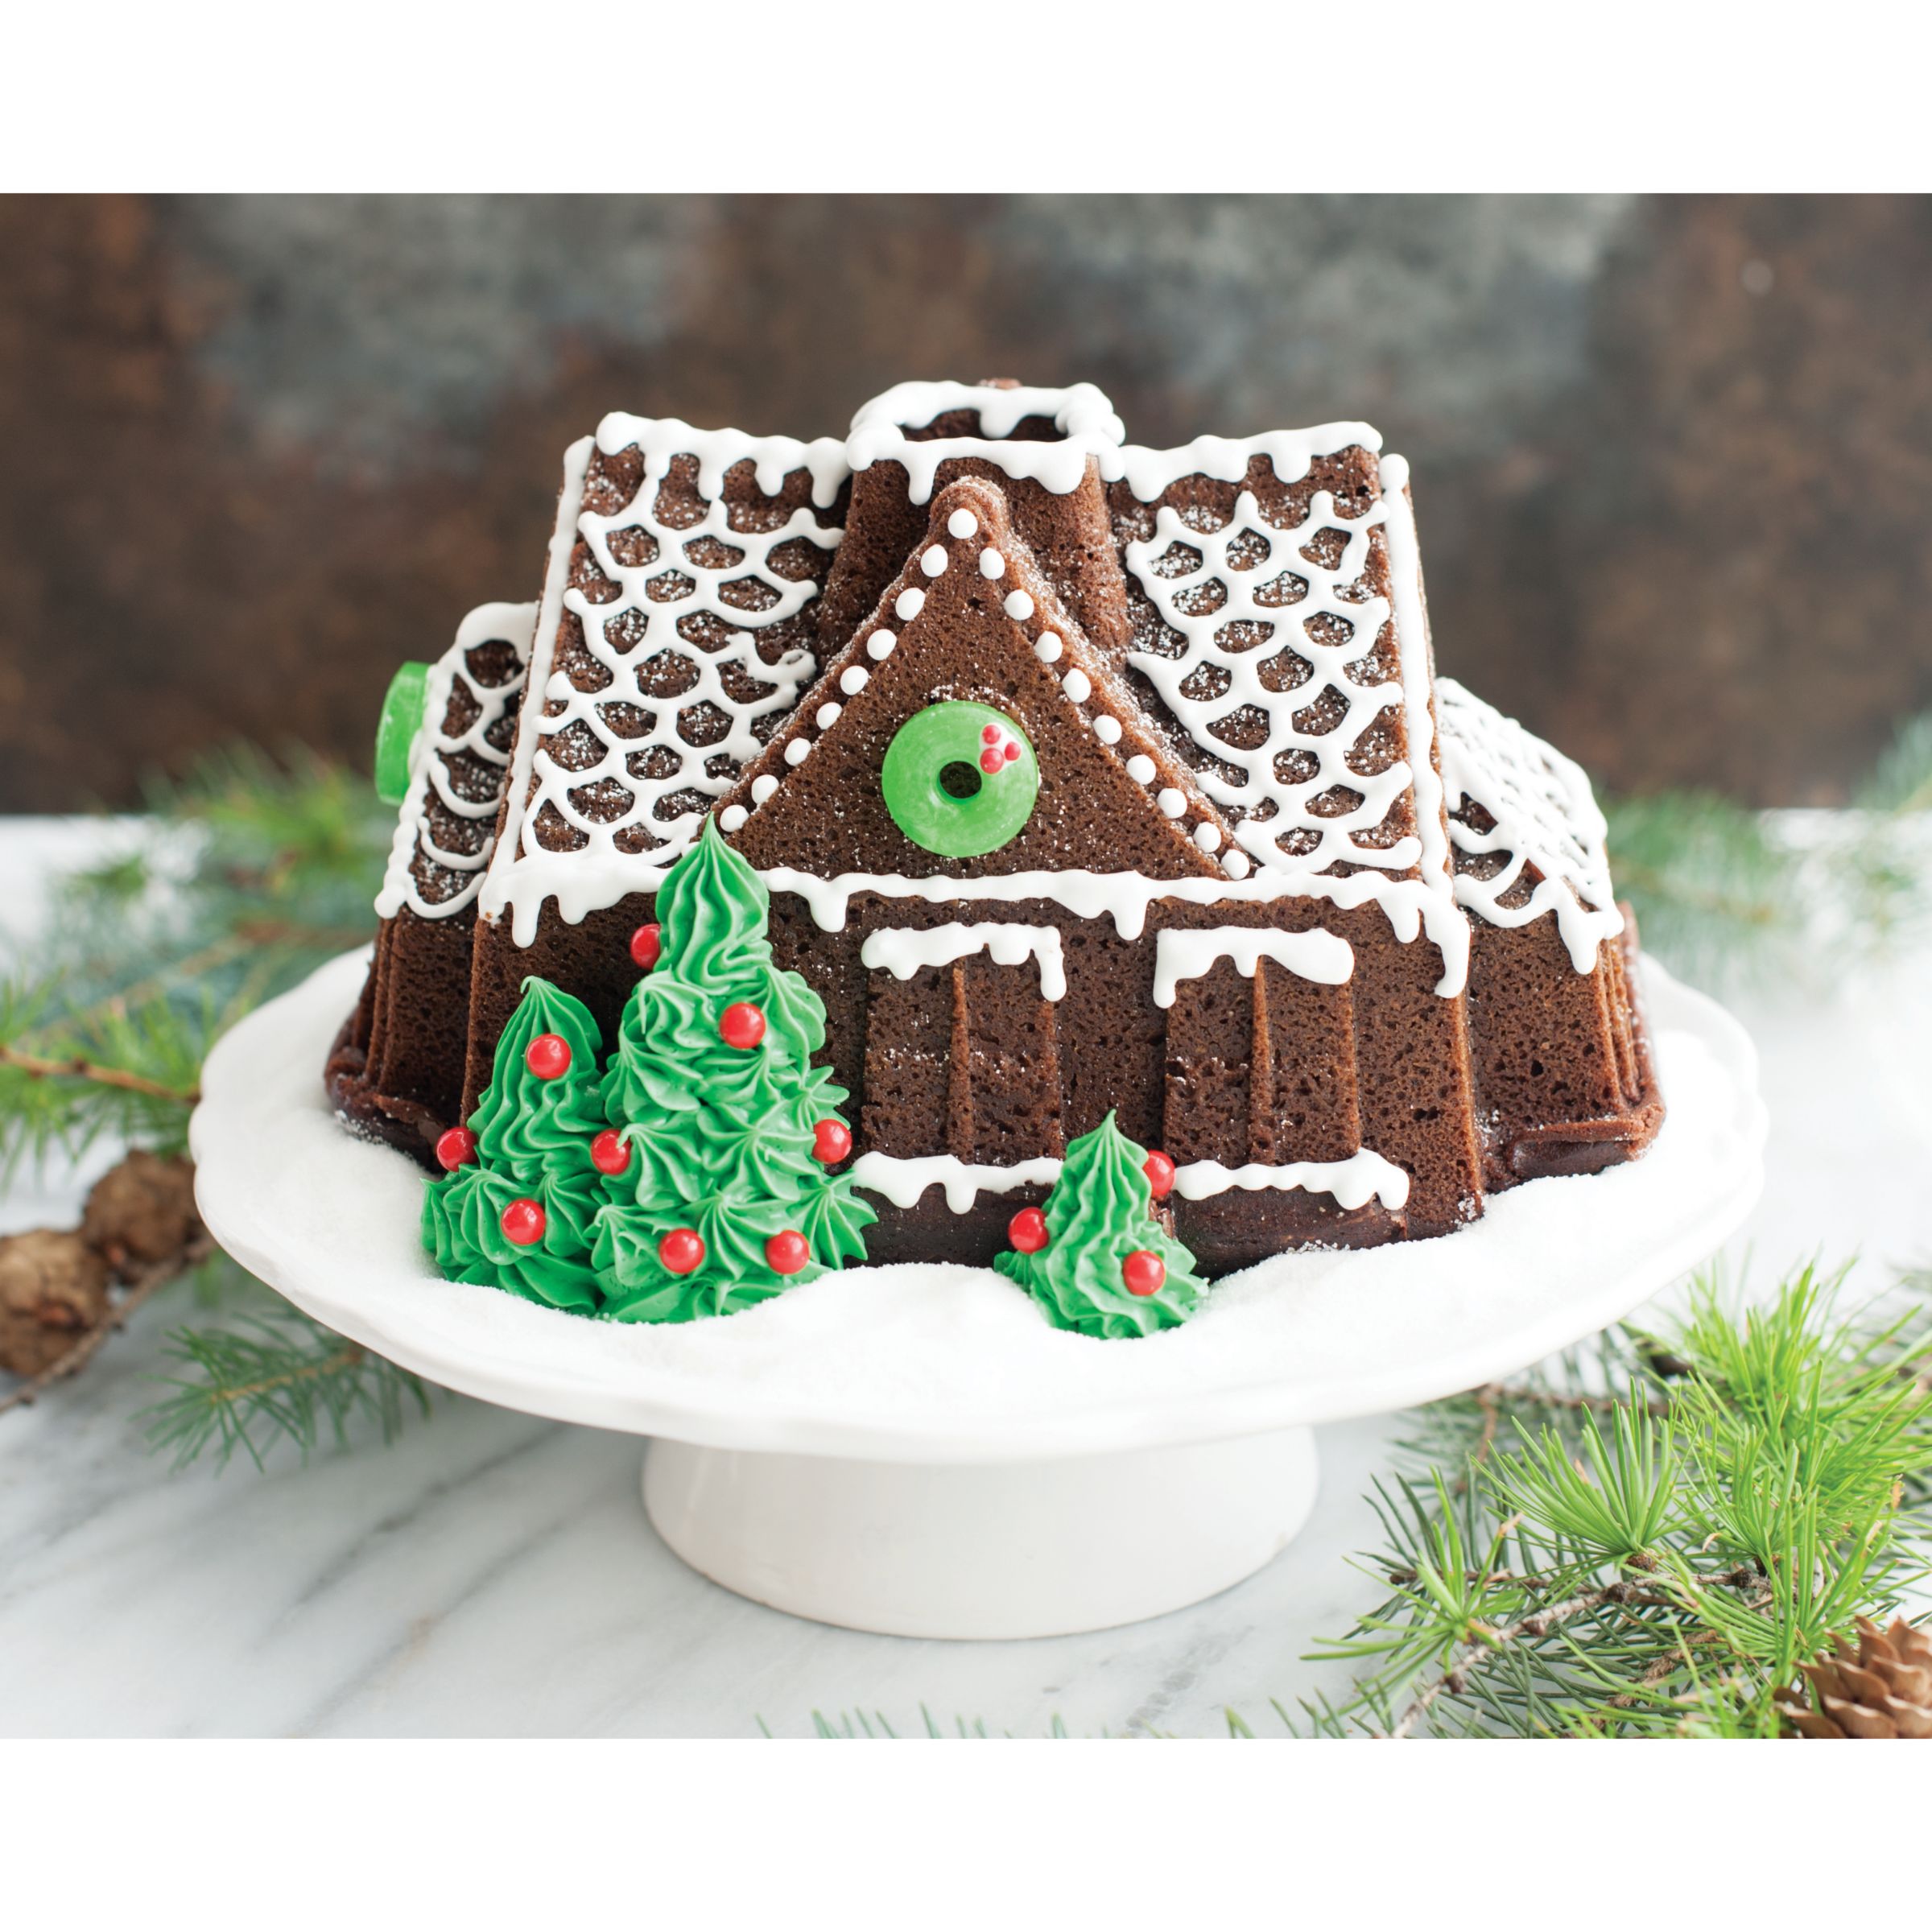 Nordic Ware Gingerbread House Bundt Pan at John Lewis & Partners